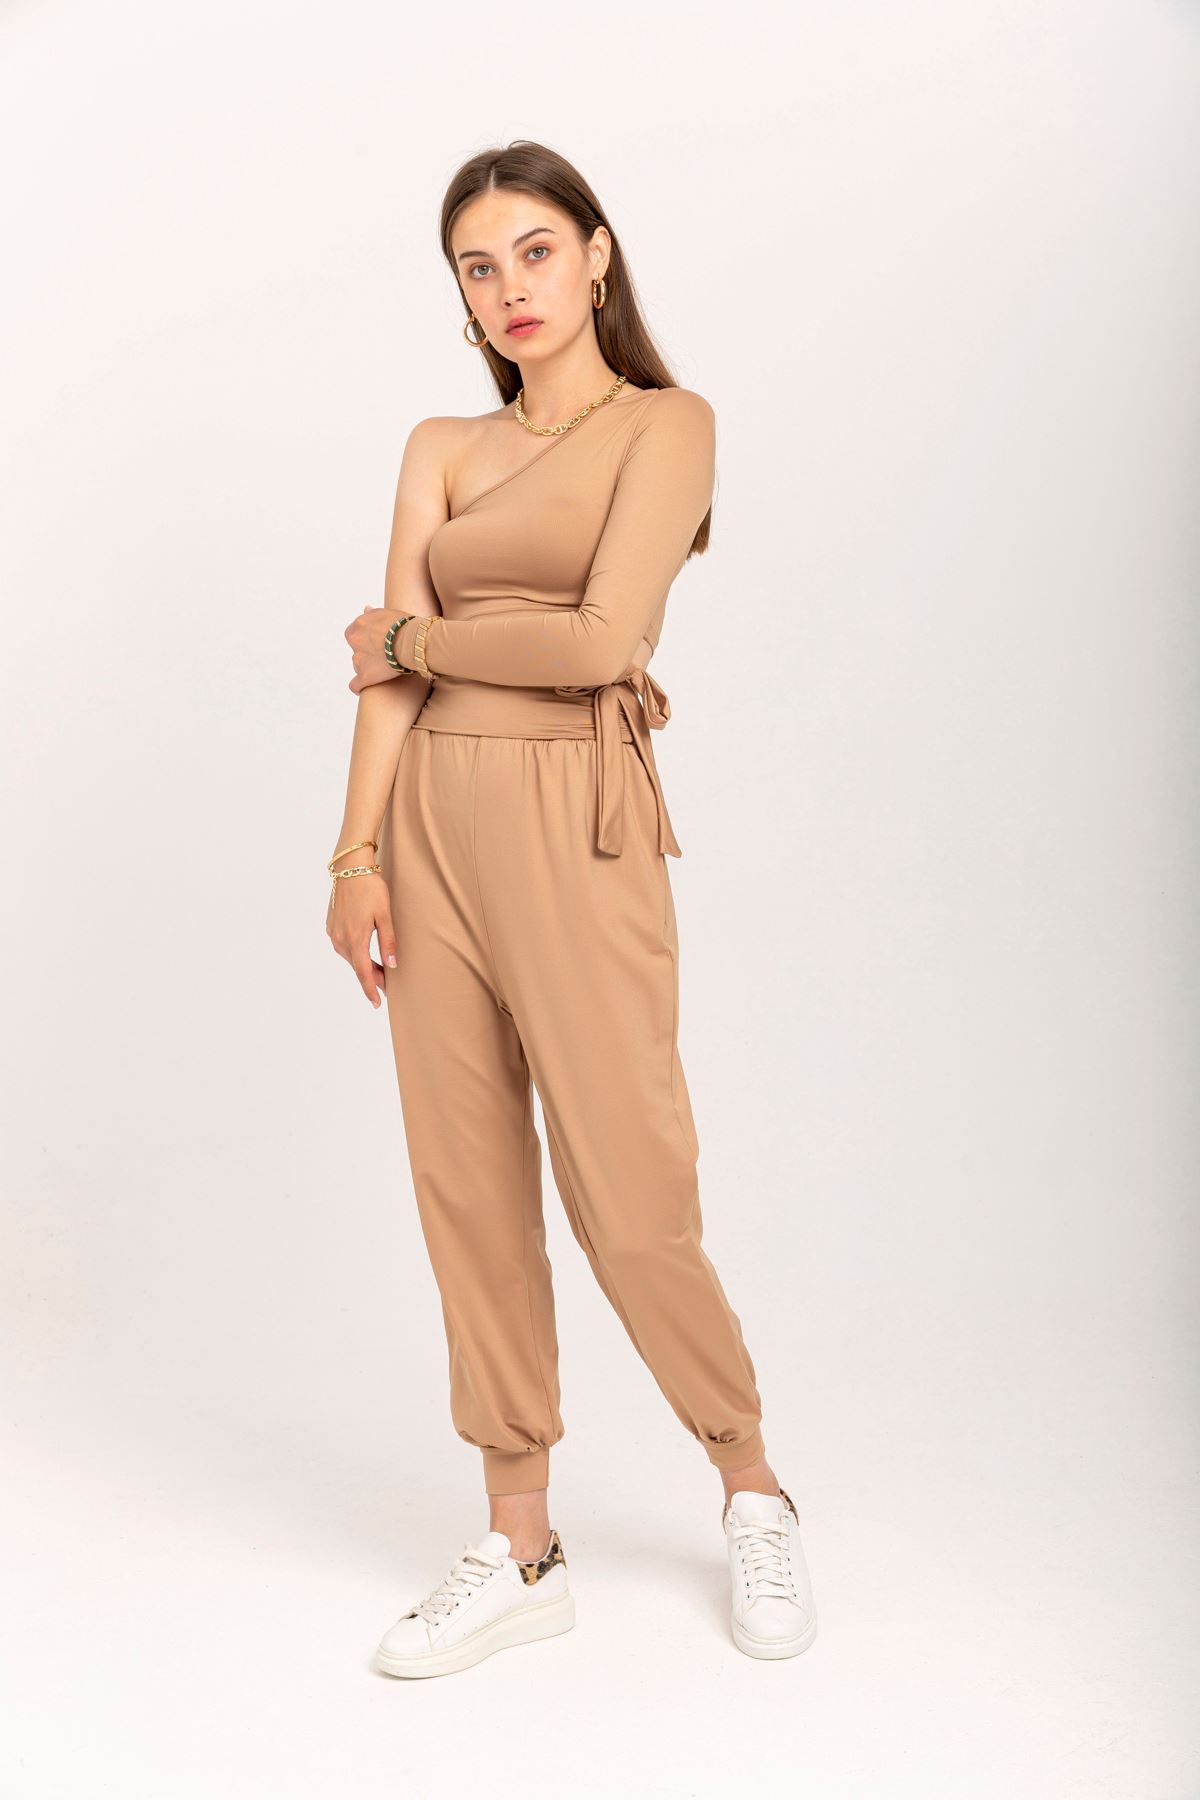 Scuba Fabric Tight Fit Asymmetrical Women'S Set 2 Pieces - Light Brown